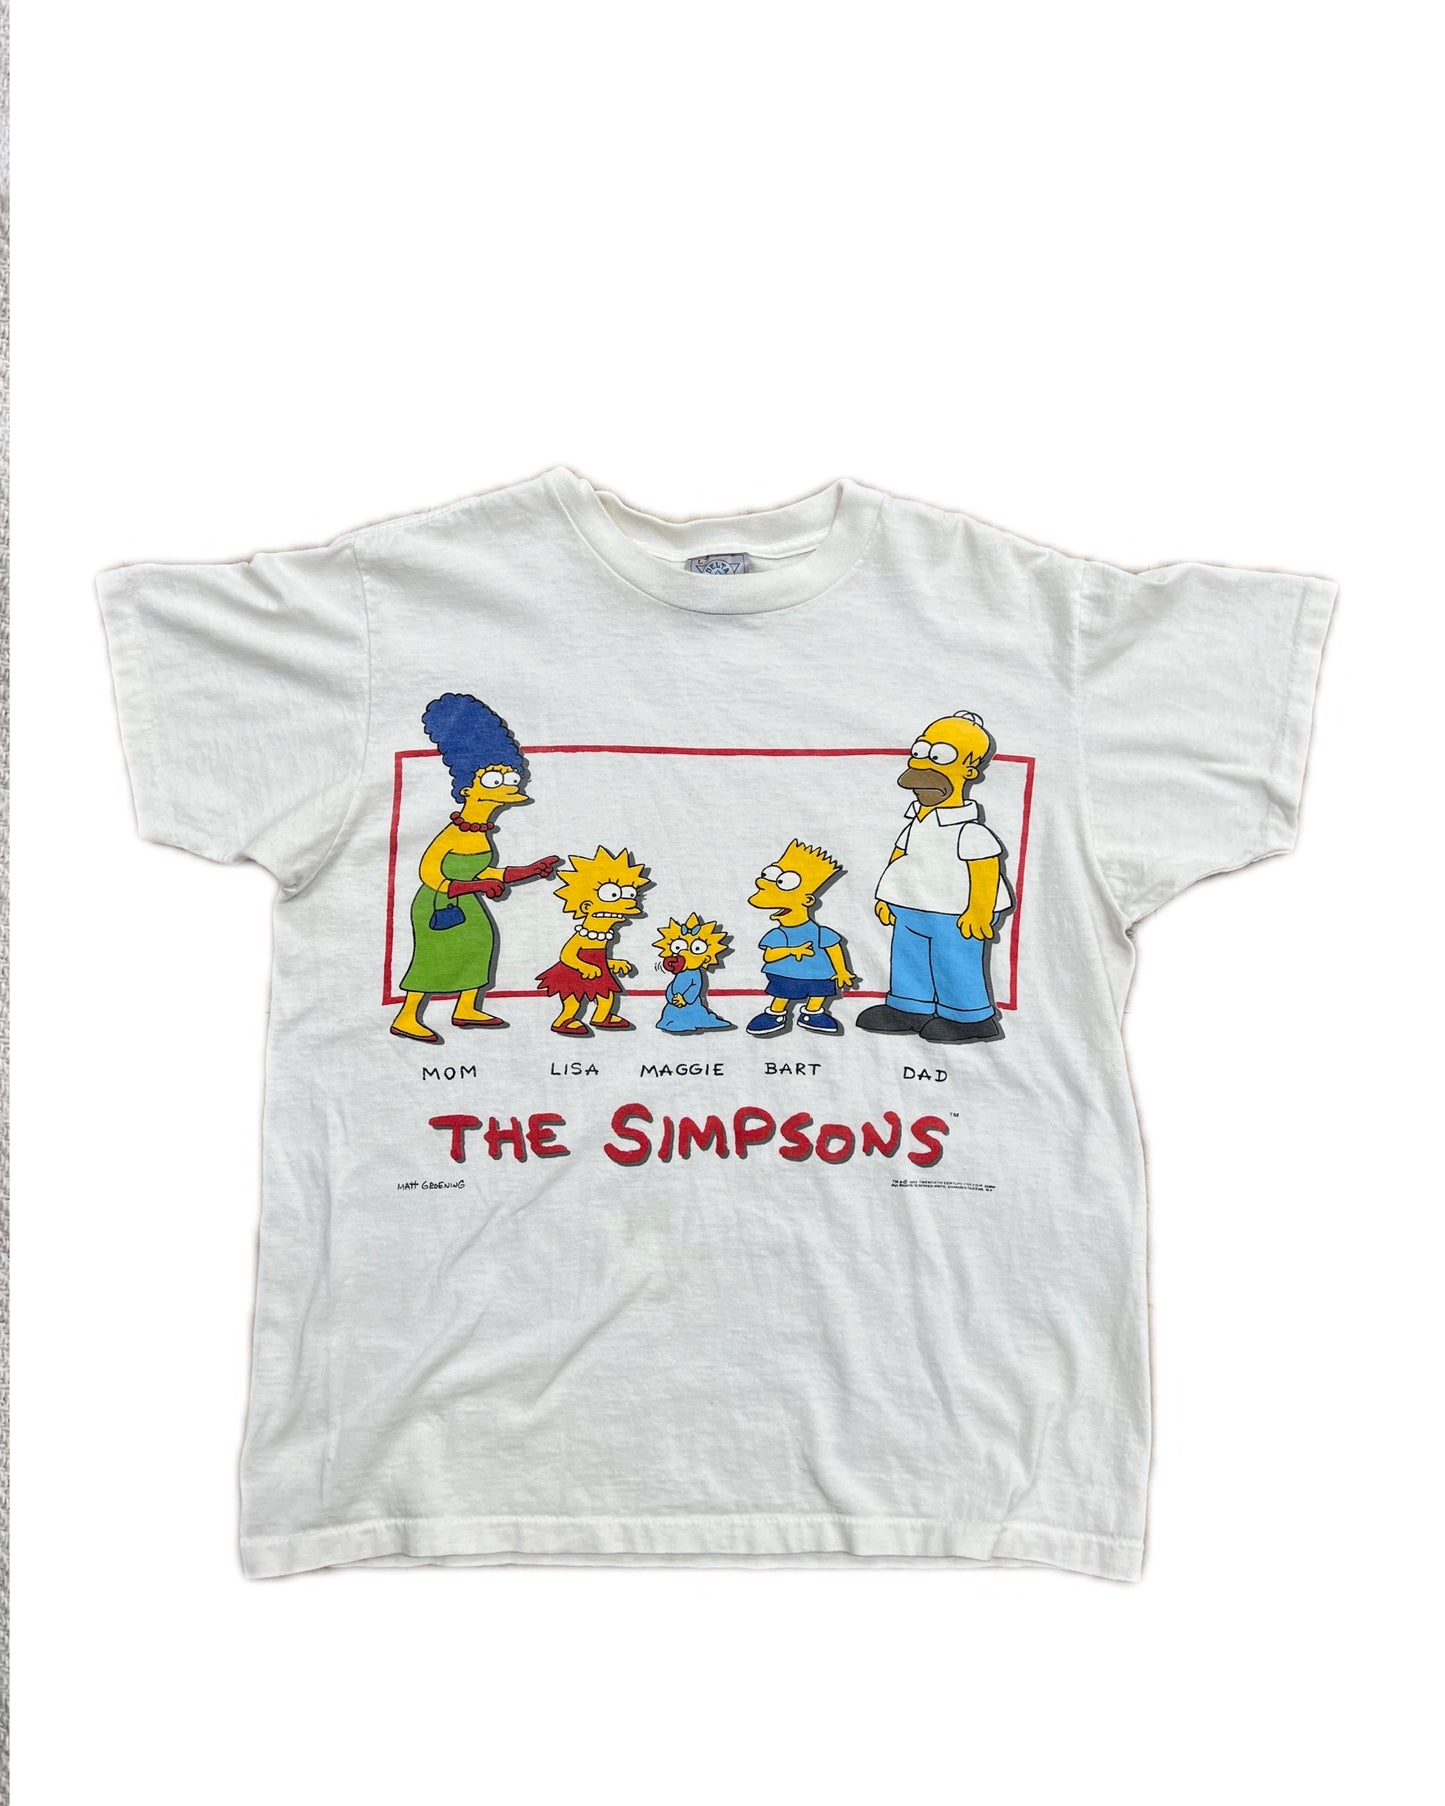 The Simpsons Family Vintage Tee White